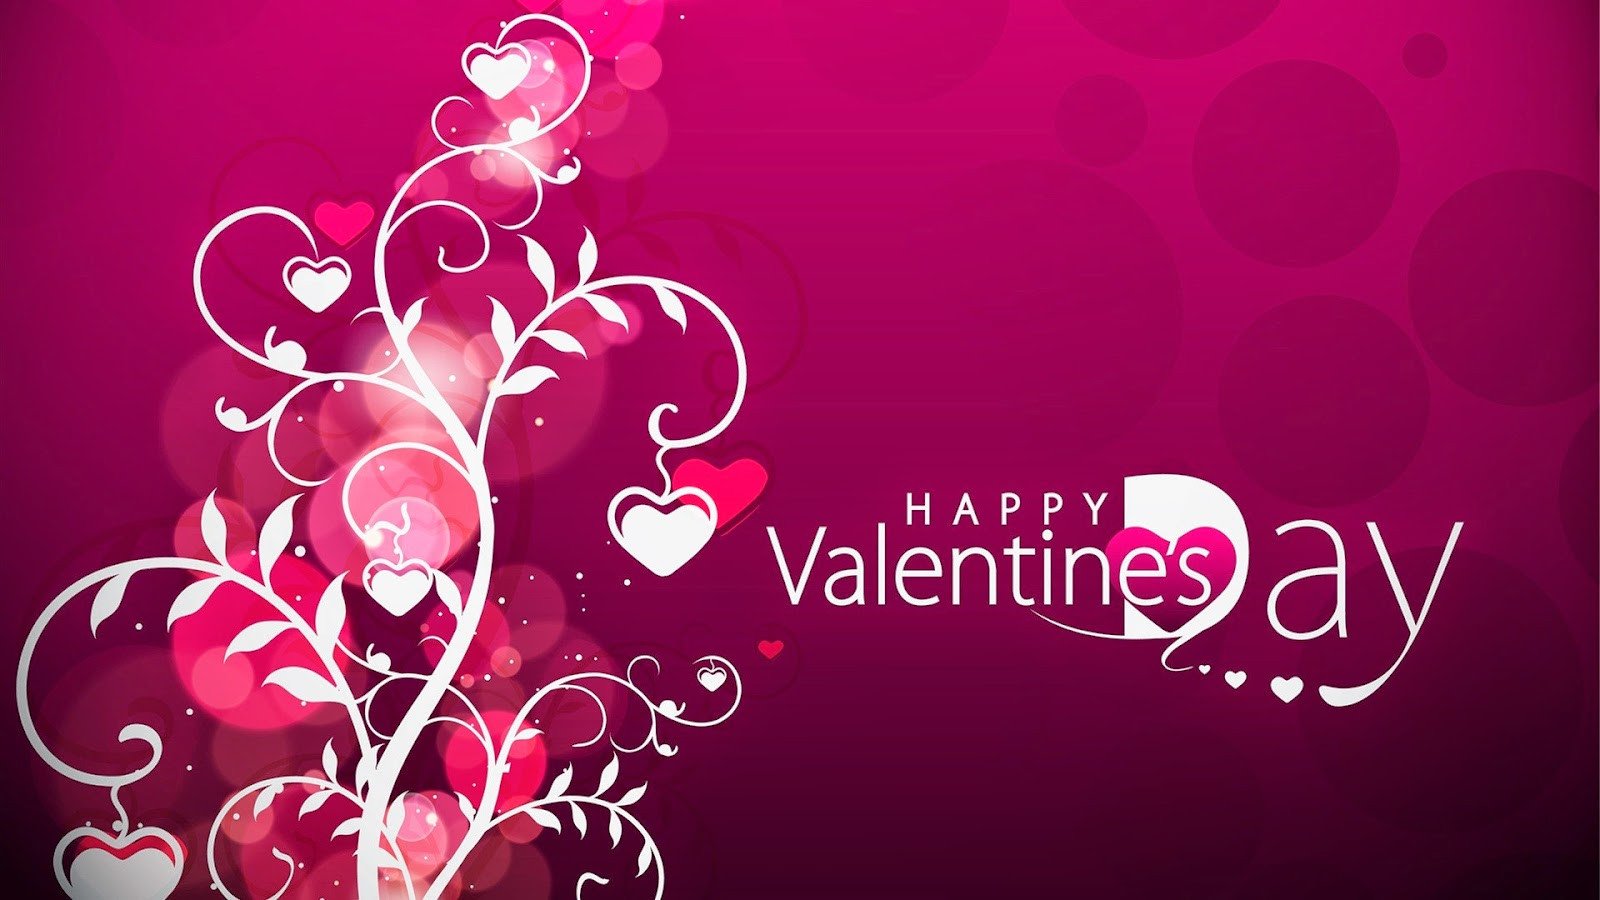 Valentine Day Wallpaper Free 15 New Valentine S Day Desktop Wallpapers for 2015 Brand